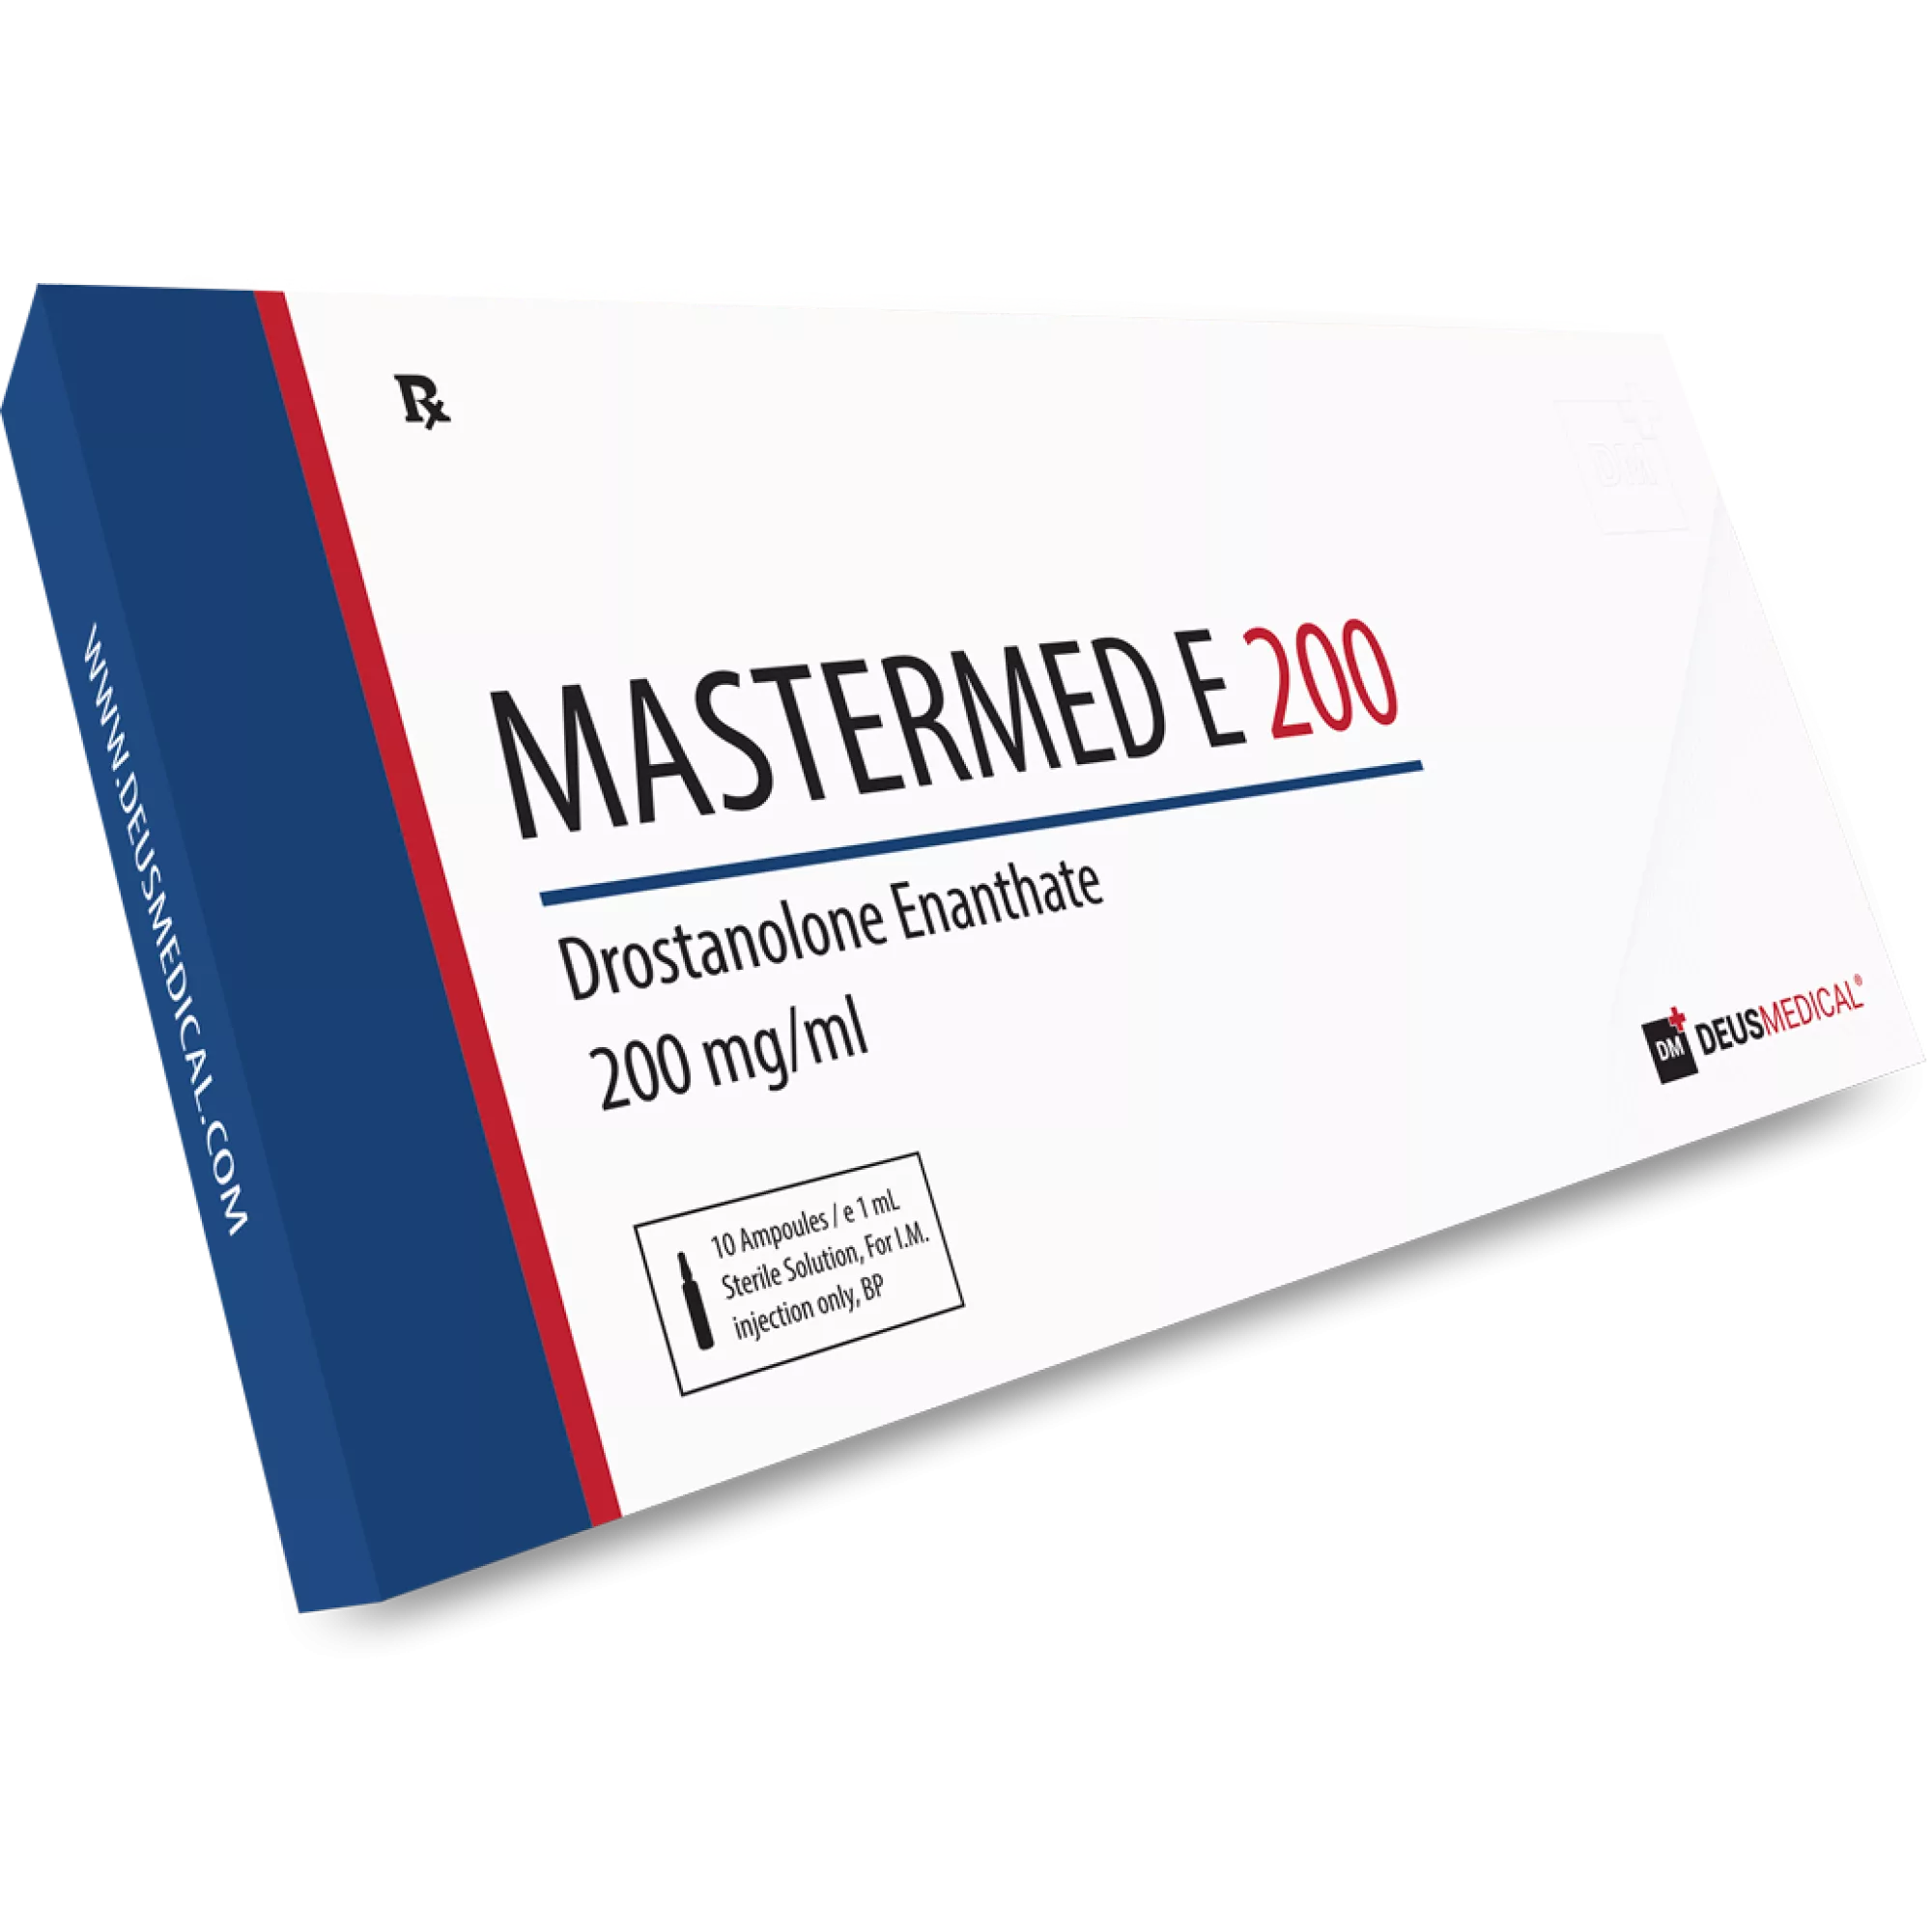 MASTERMED E 200 (Drostanolone Enanthate), Deus Medical, Buy Steroids Online - www.deuspower.shop